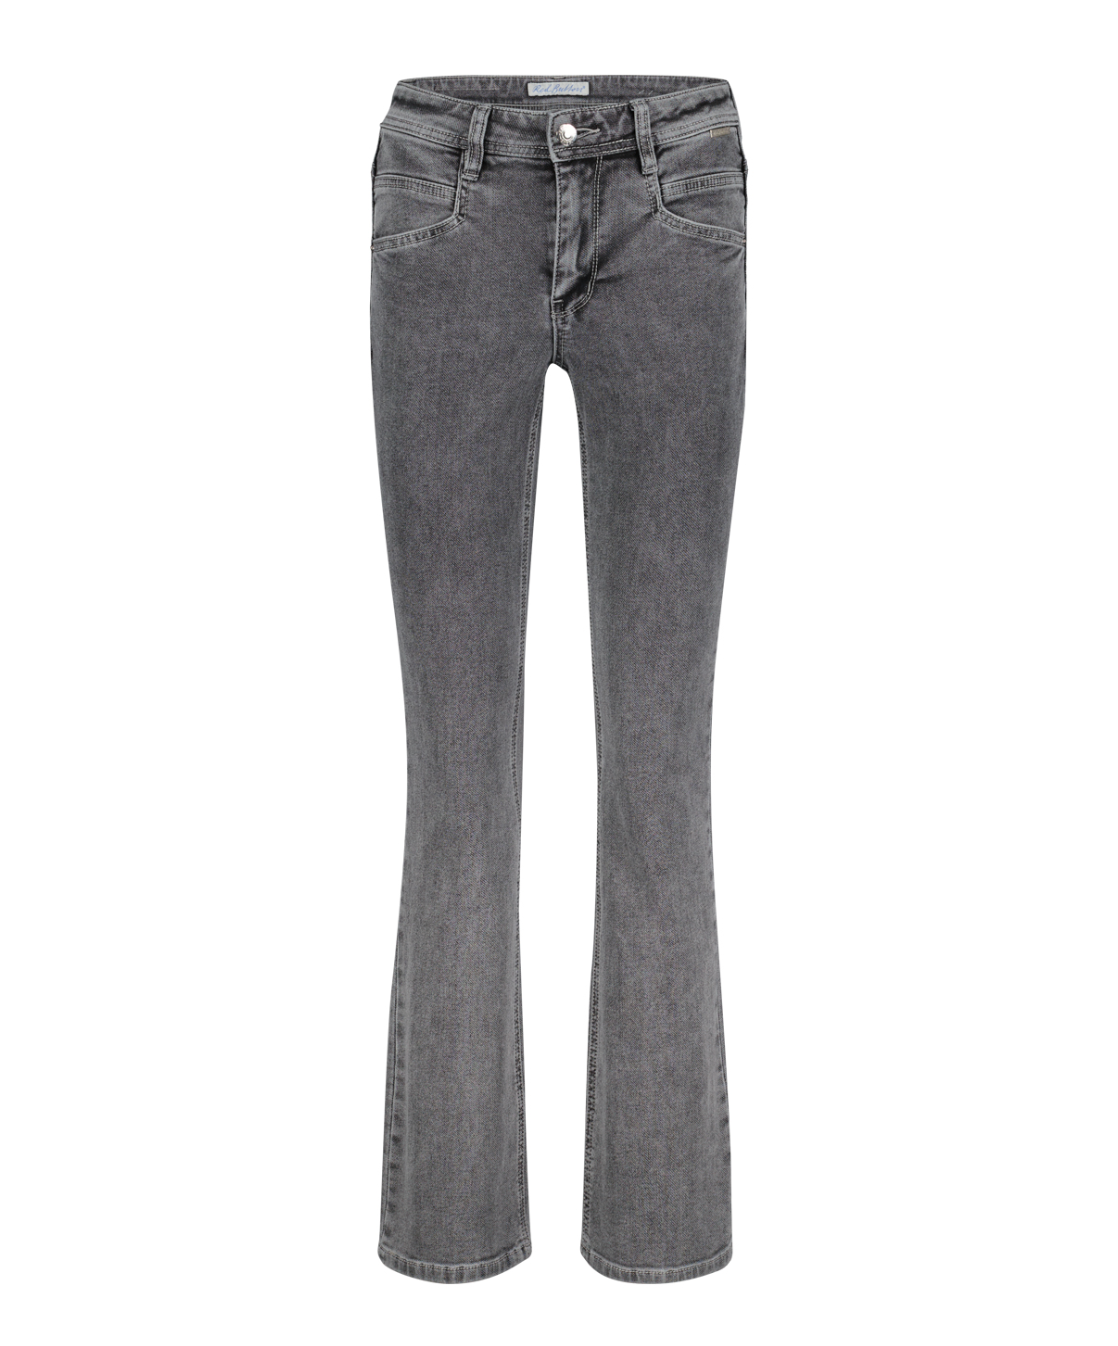 Red Button Babette grey jeans 30" length leg